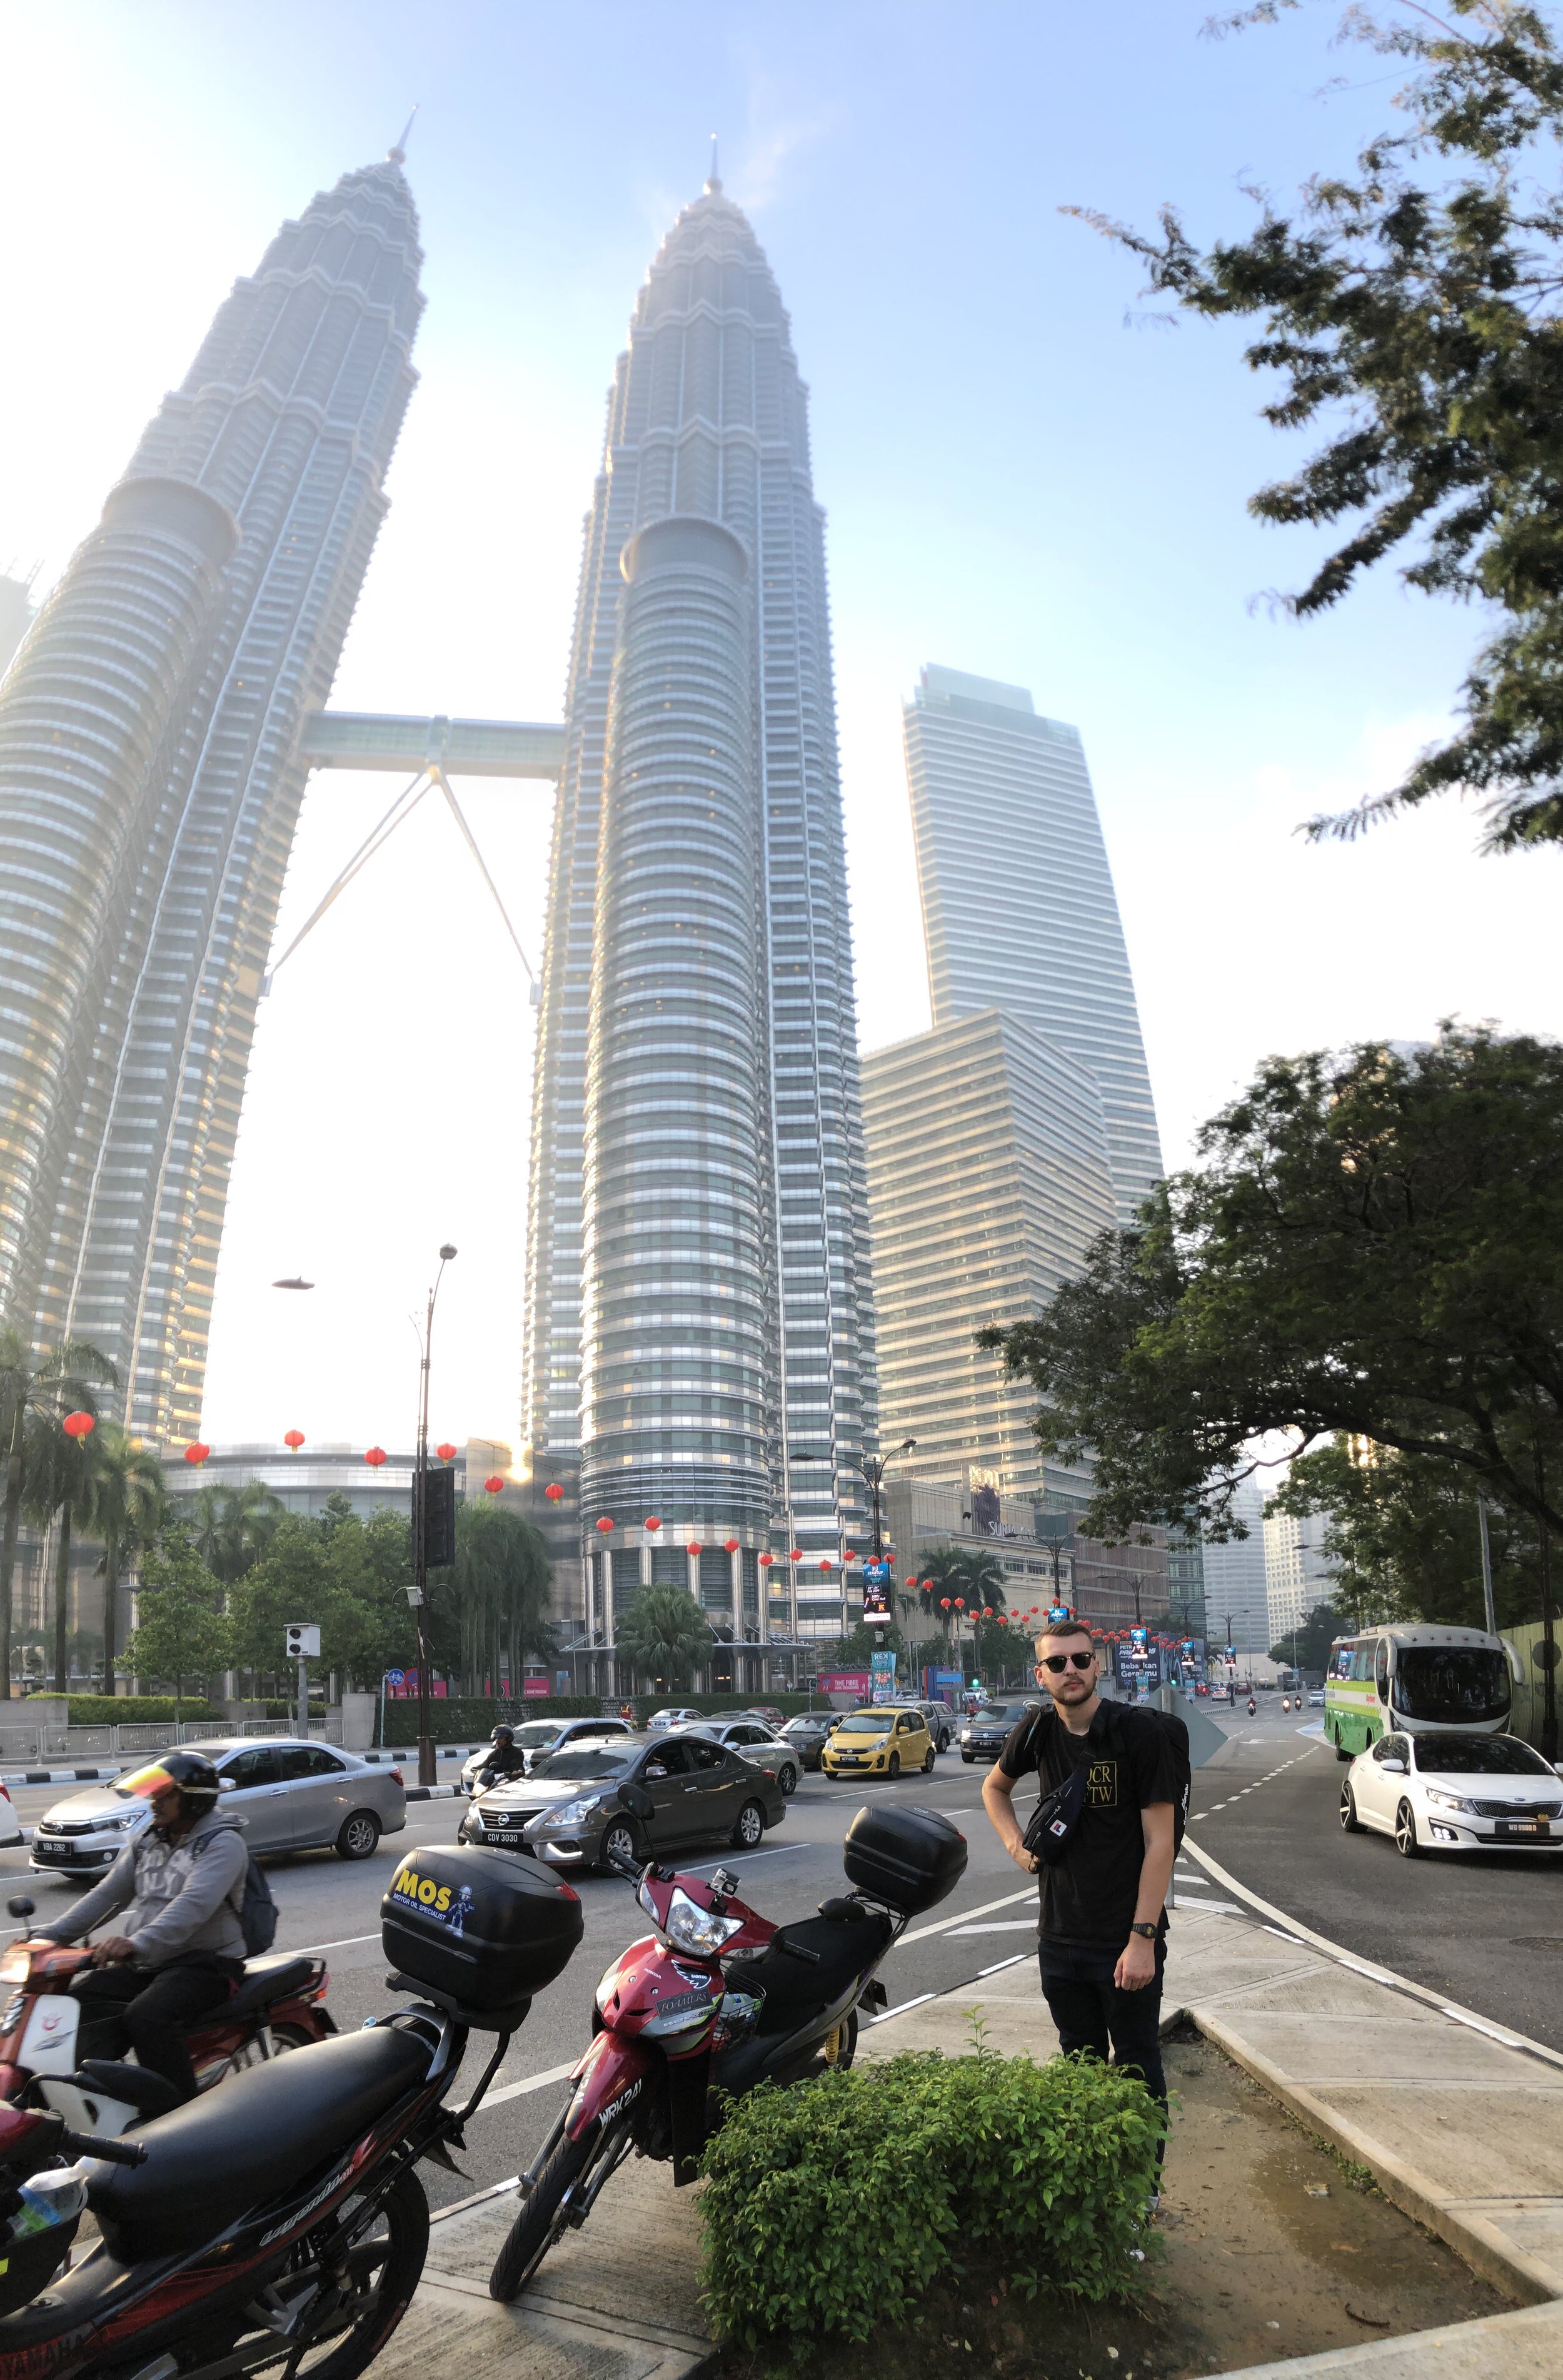 Token Petronas Towers photo before departure